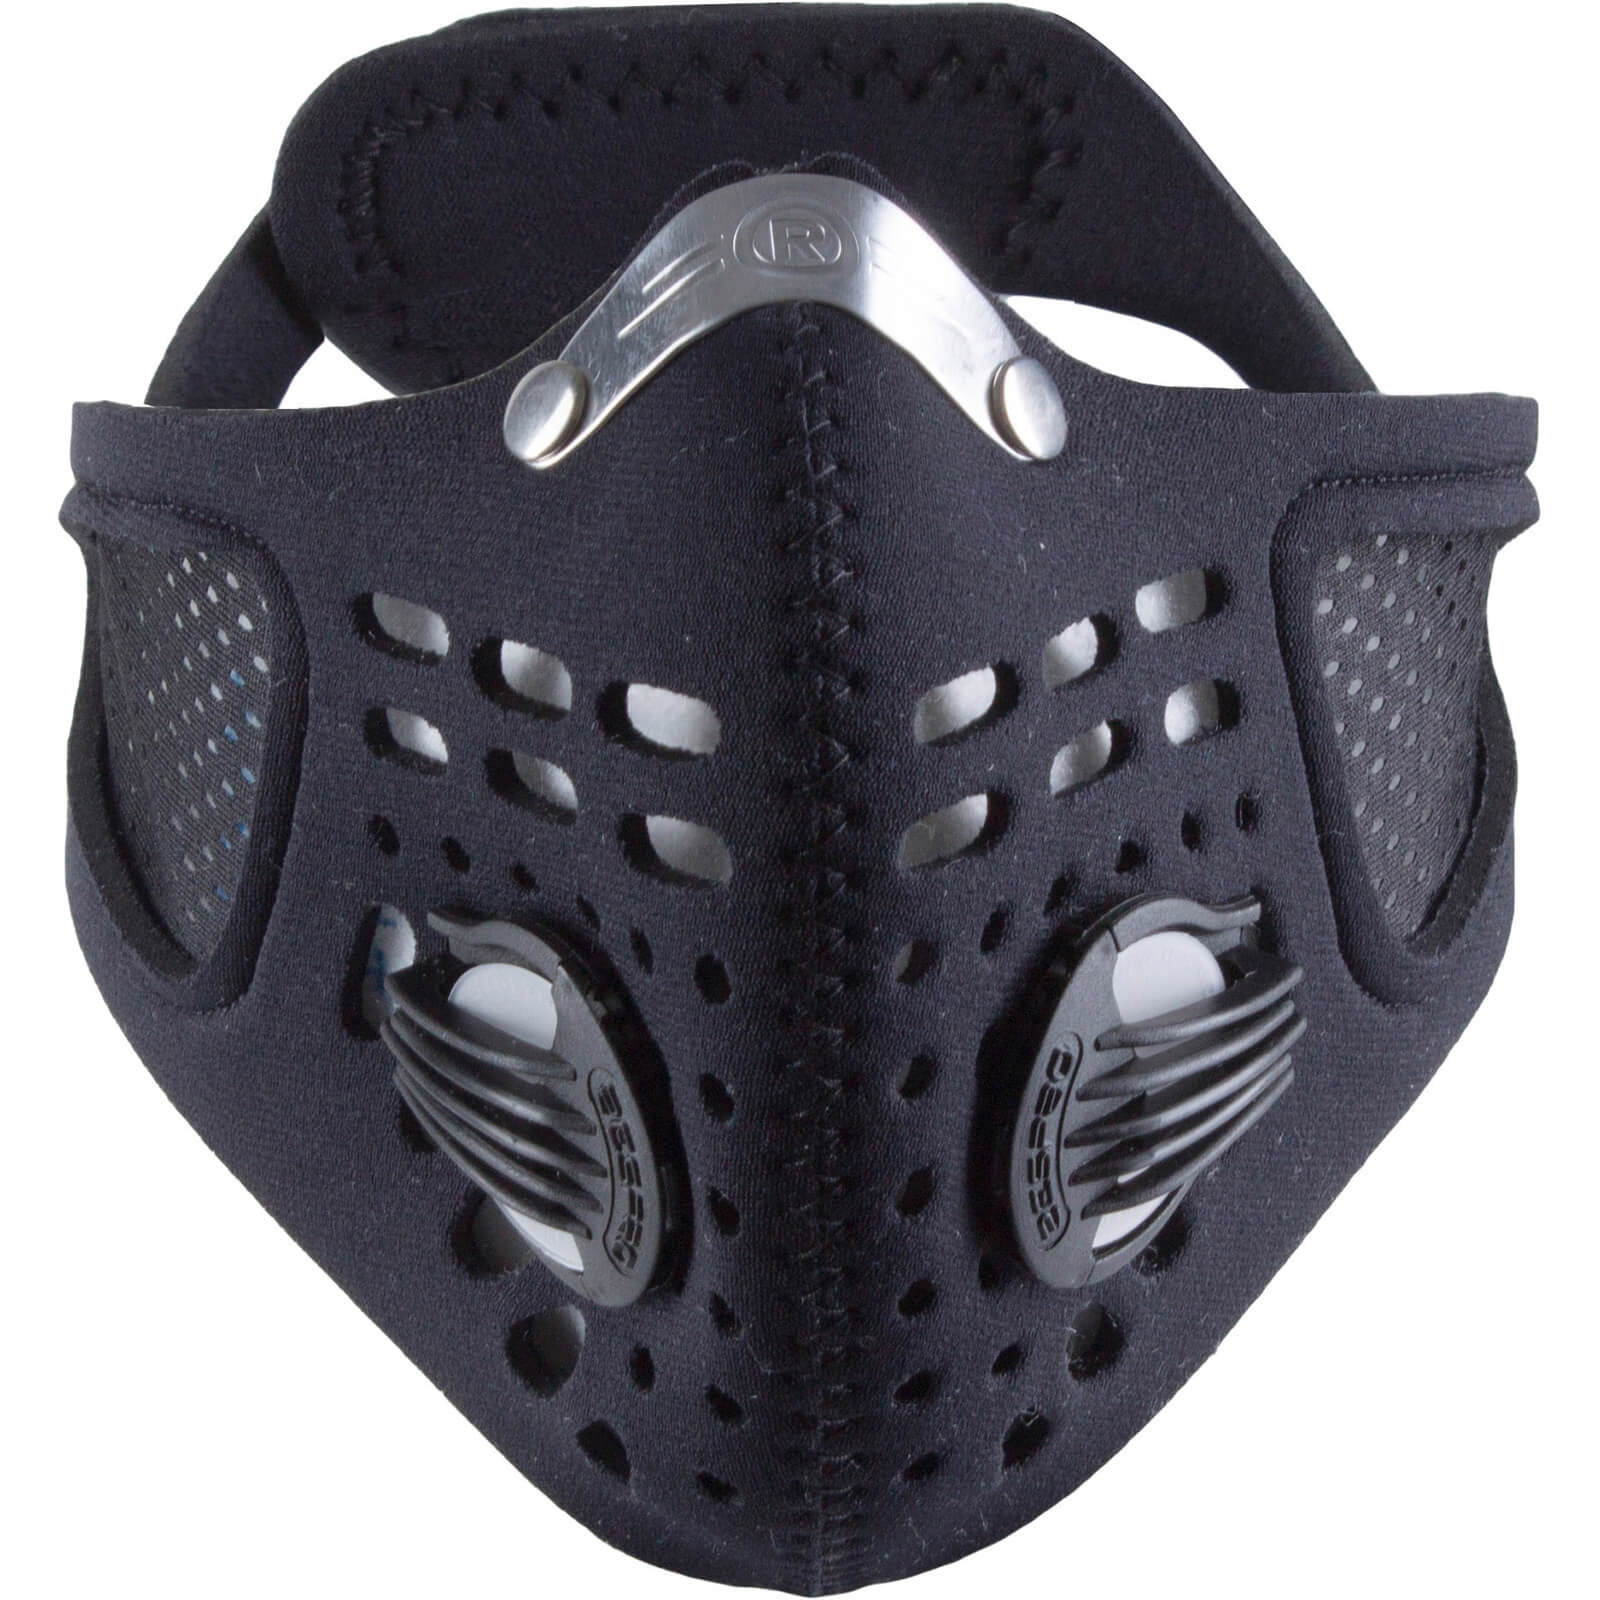 Respro Sportsta Mask - L - Black